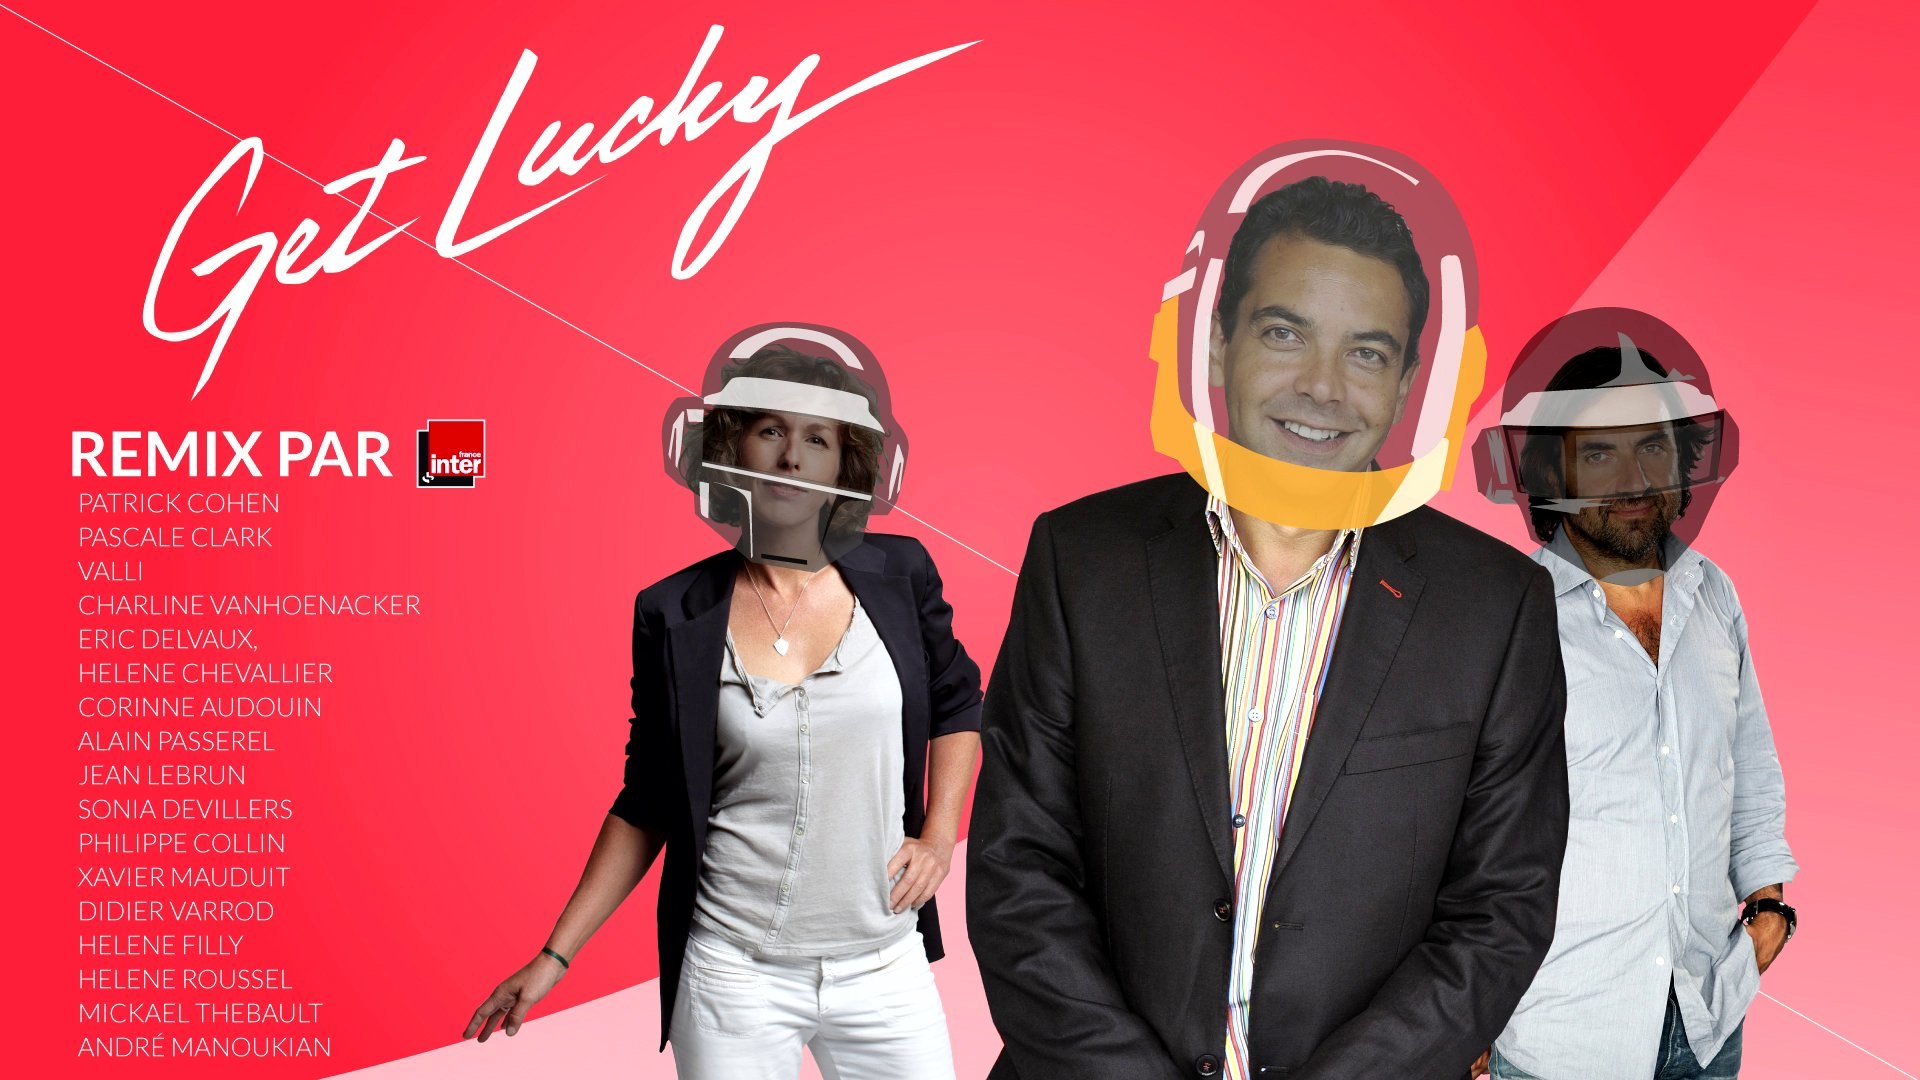 Get Lucky" remixé par France Inter - Vidéo Dailymotion